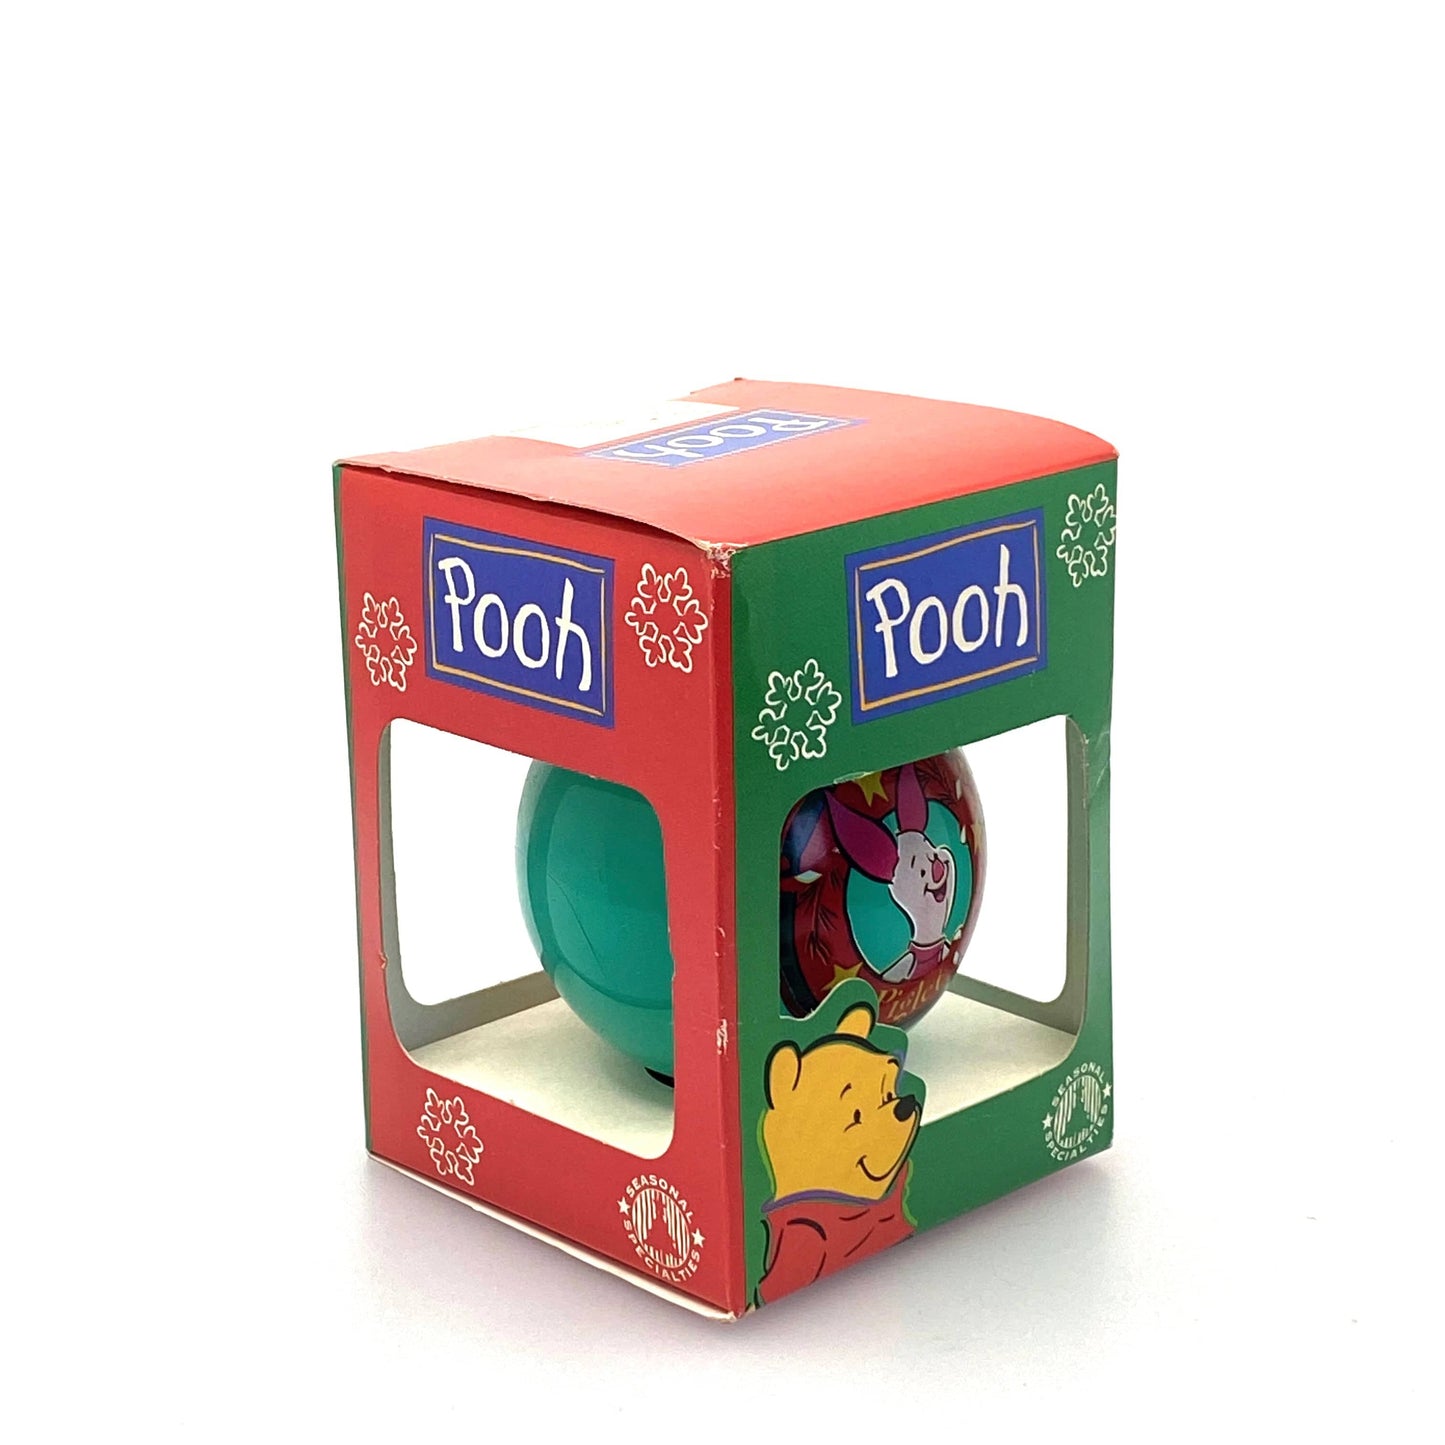 Seasonal Specialties Winne the Pooh “Piglet” Holiday Ornament Green Ball